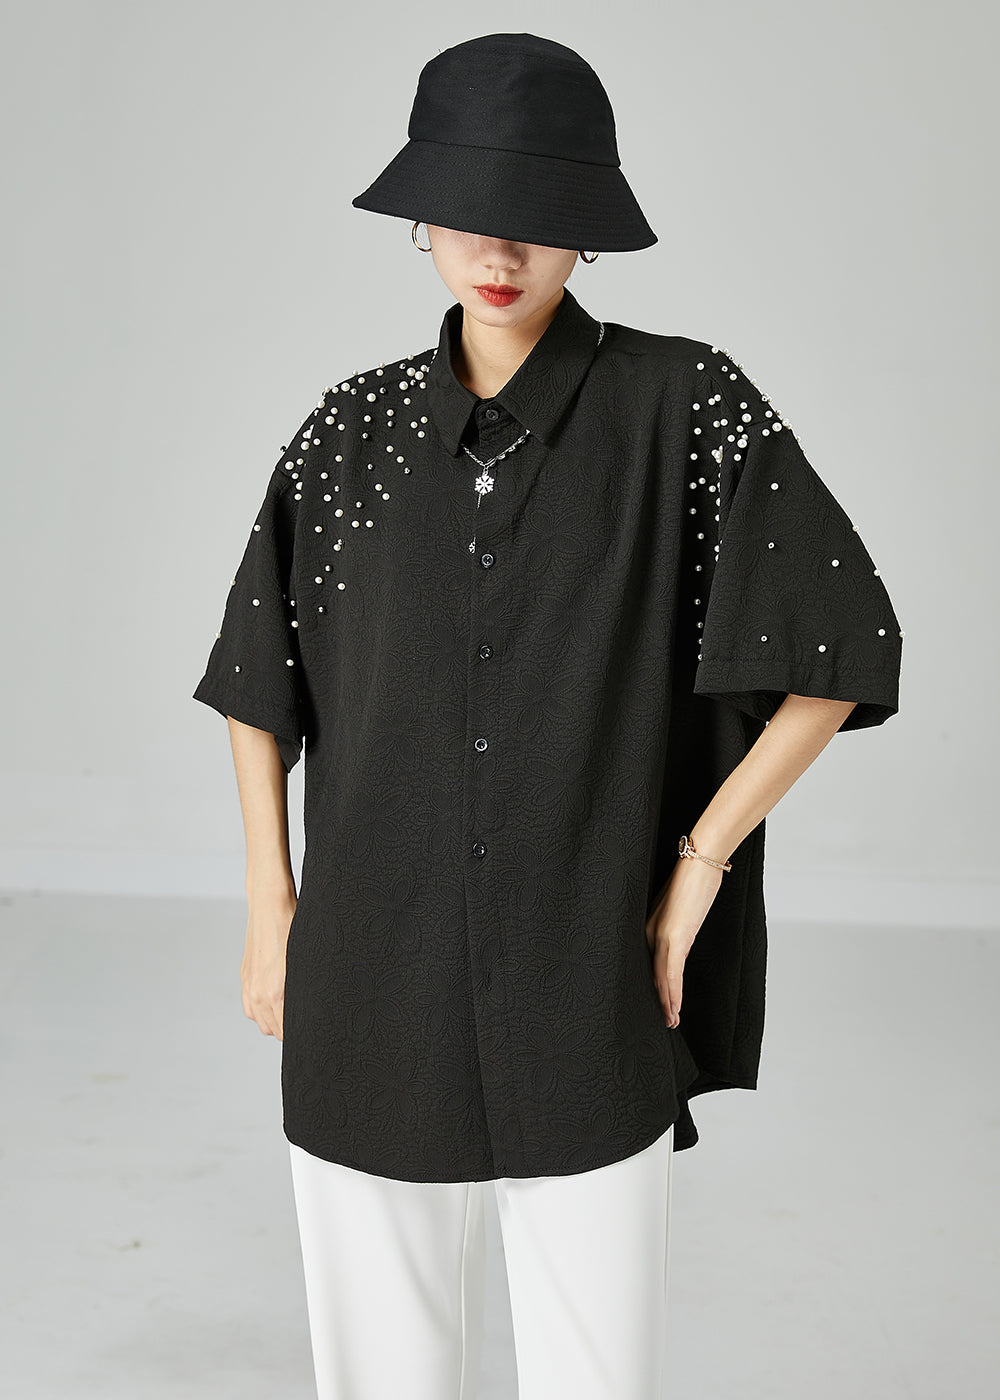 Handmade Black Oversized Nail Bead Jacquard Cotton Blouses Short Sleeve LY2468 - fabuloryshop